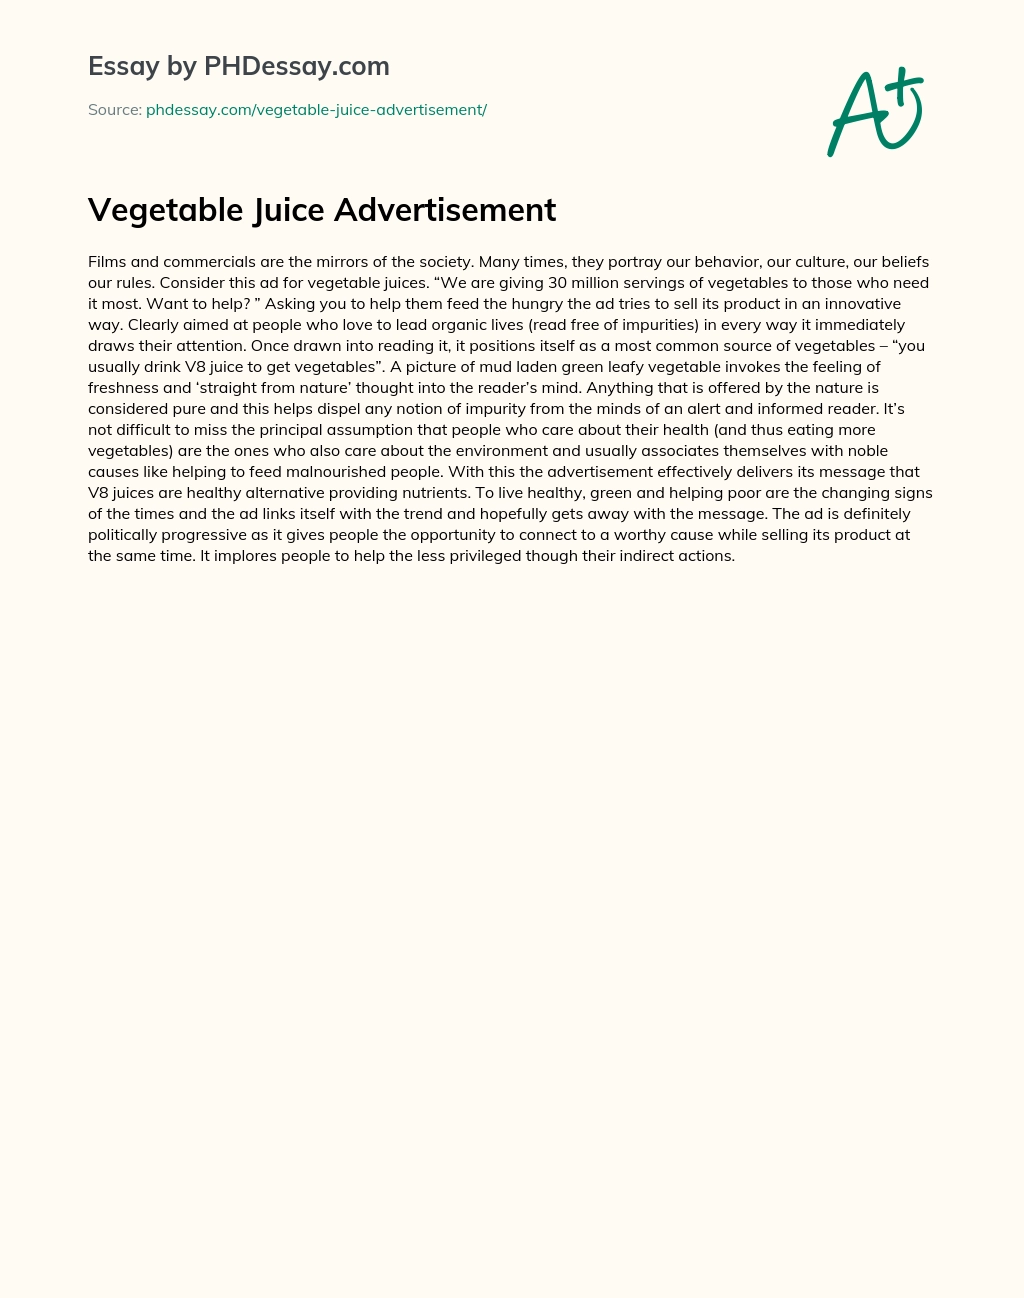 Vegetable Juice Advertisement essay